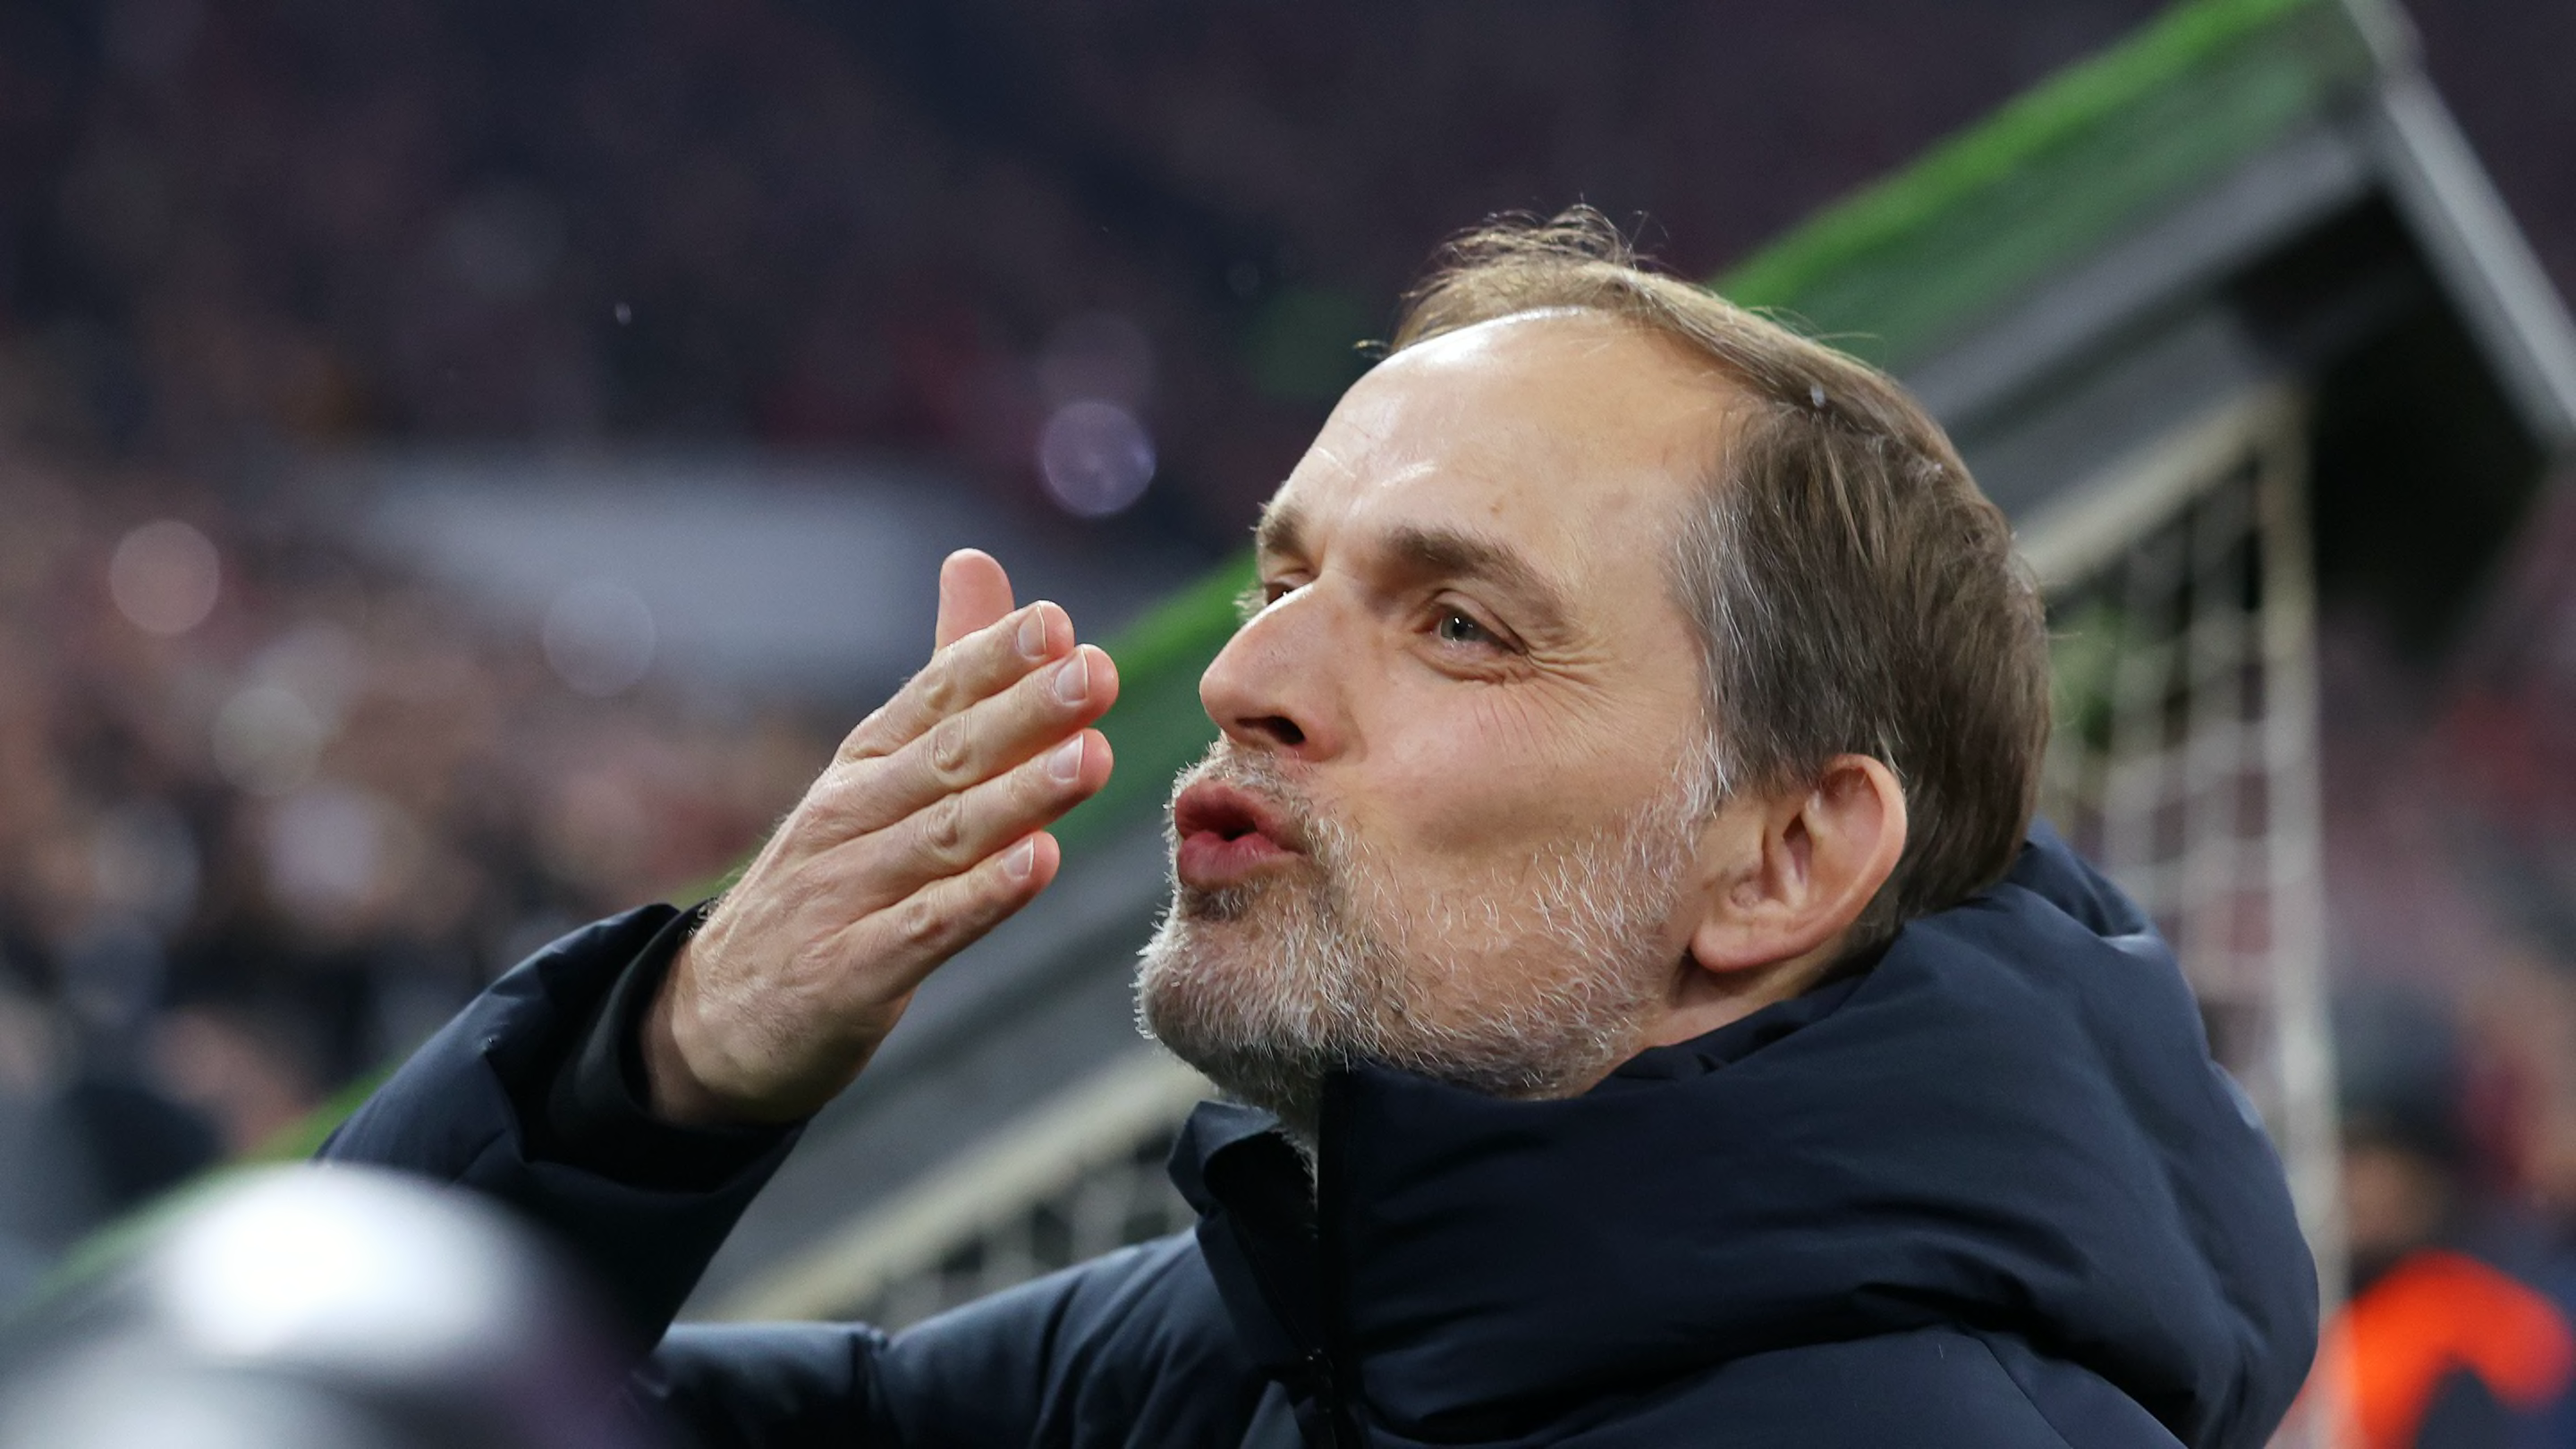 Qui sera le prochain entraîneur du Bayern Munich après Thomas Tuchel selon les bookmakers ?